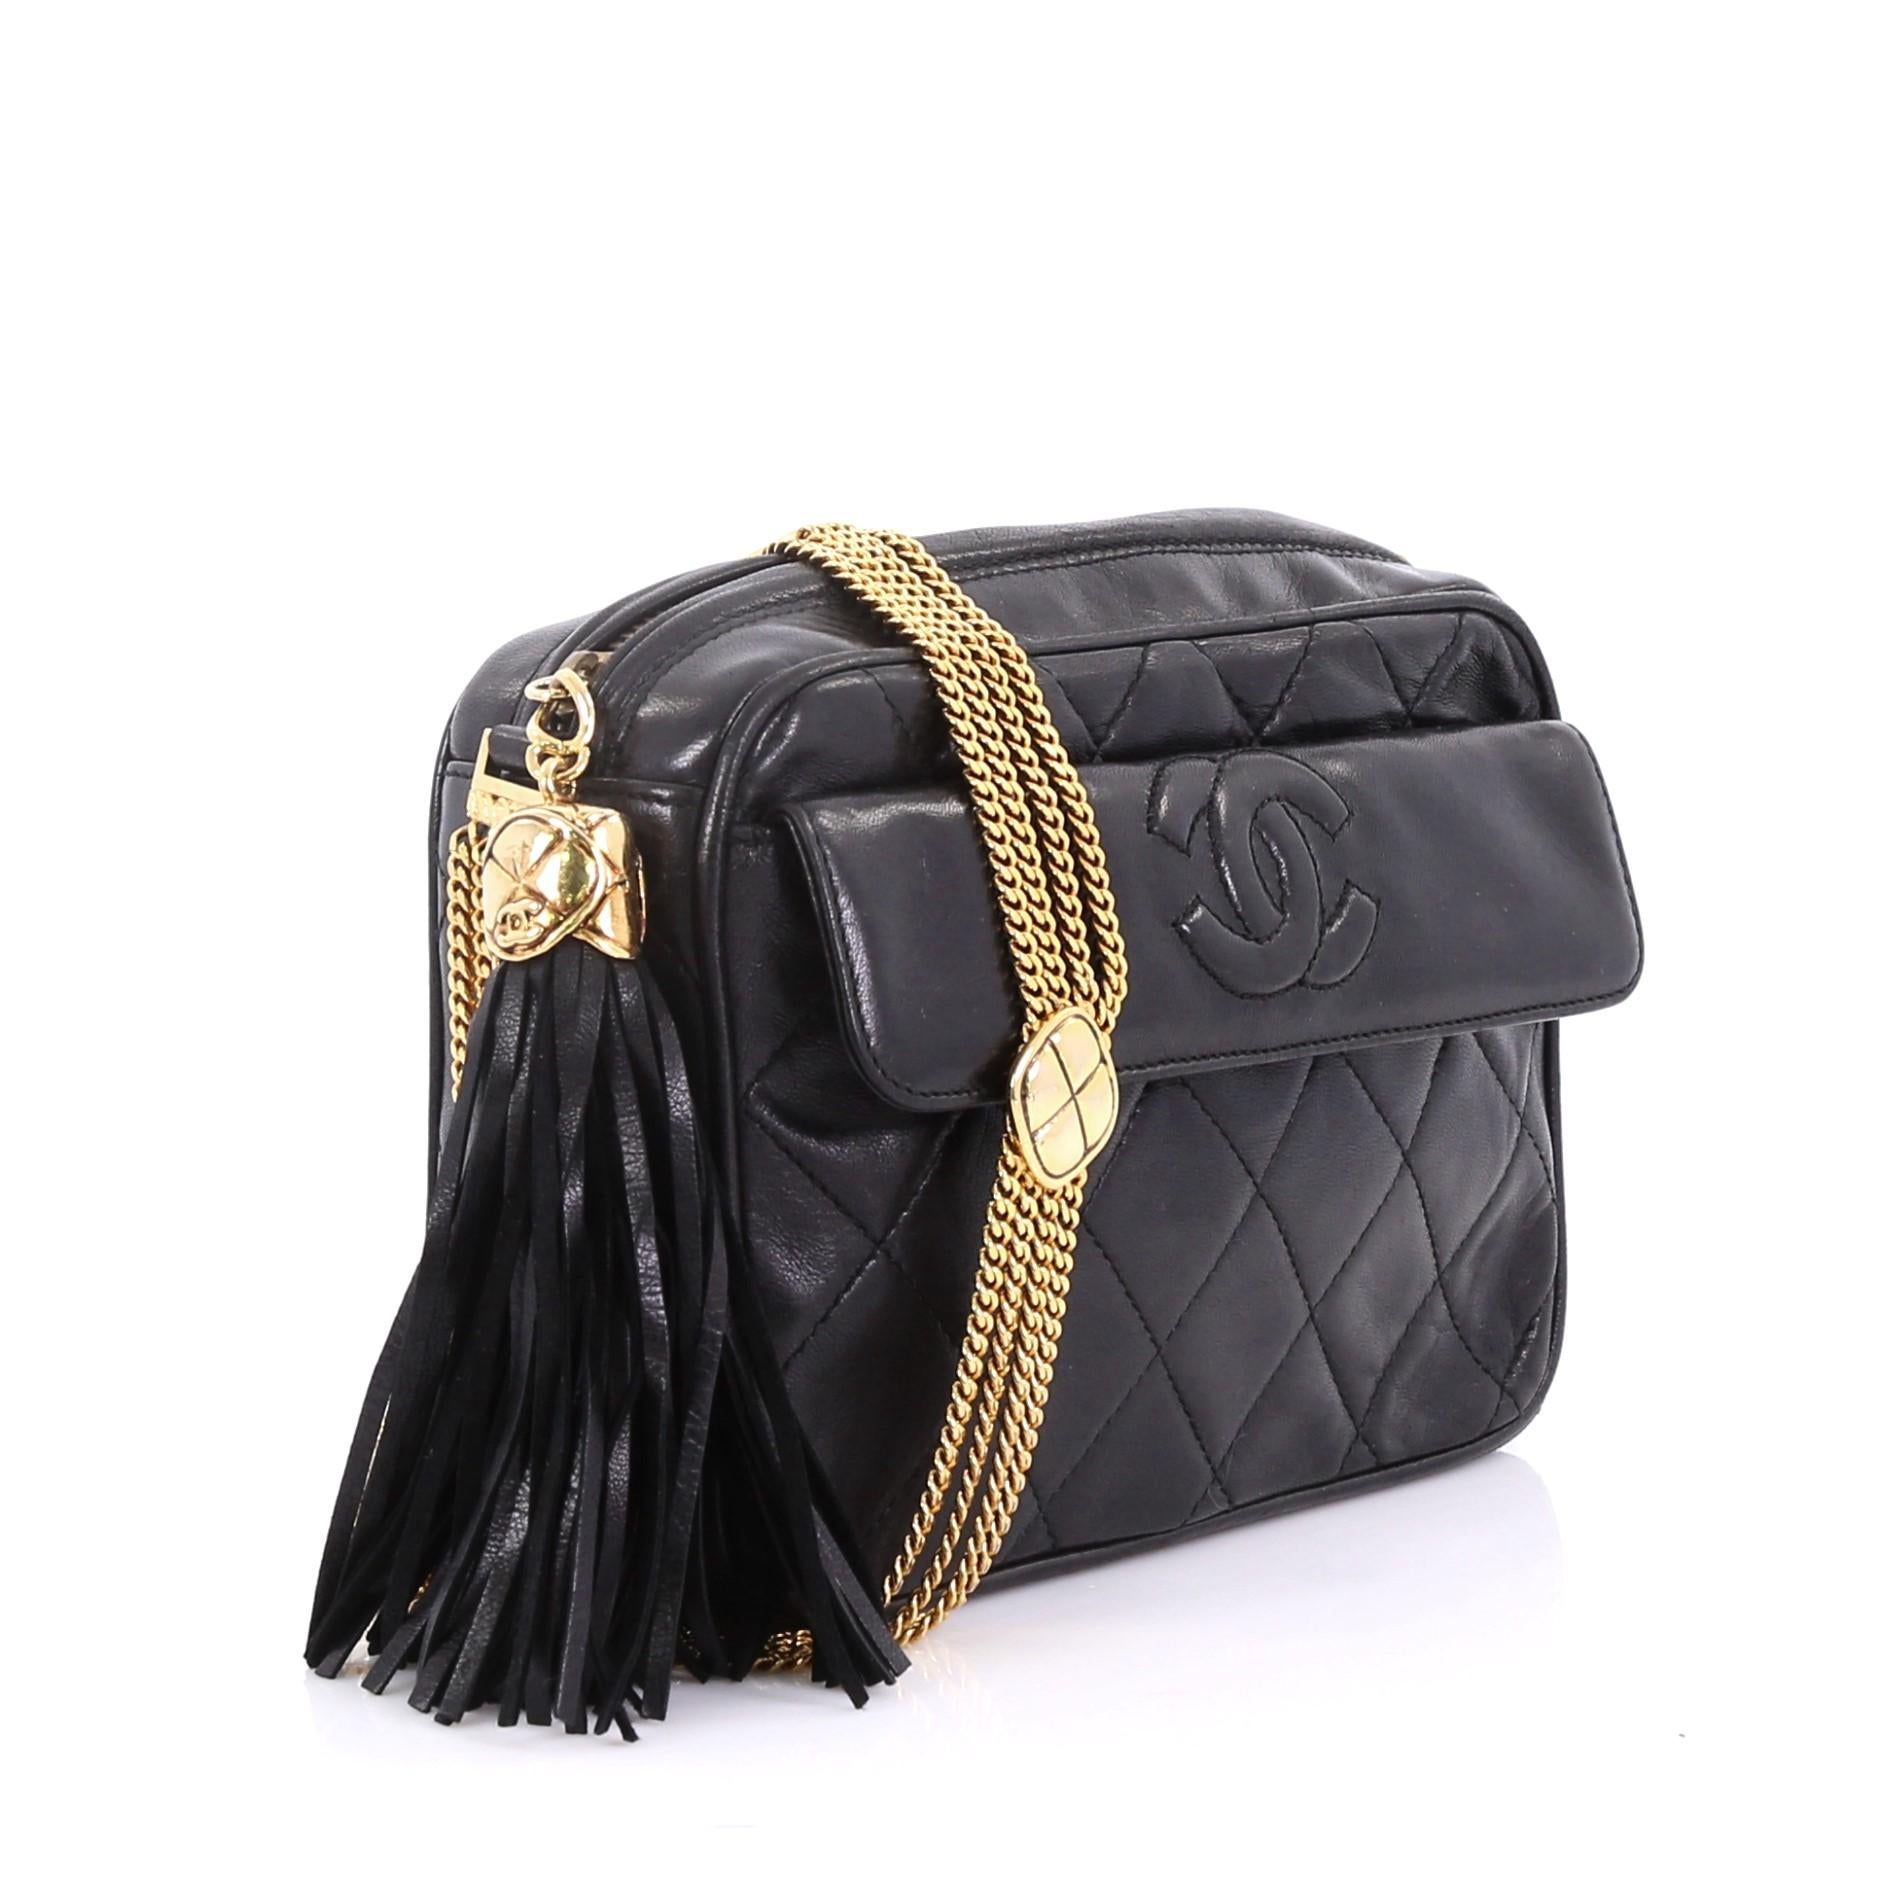 Black Chanel Vintage Camera Tassel Bag Quilted Leather Mini